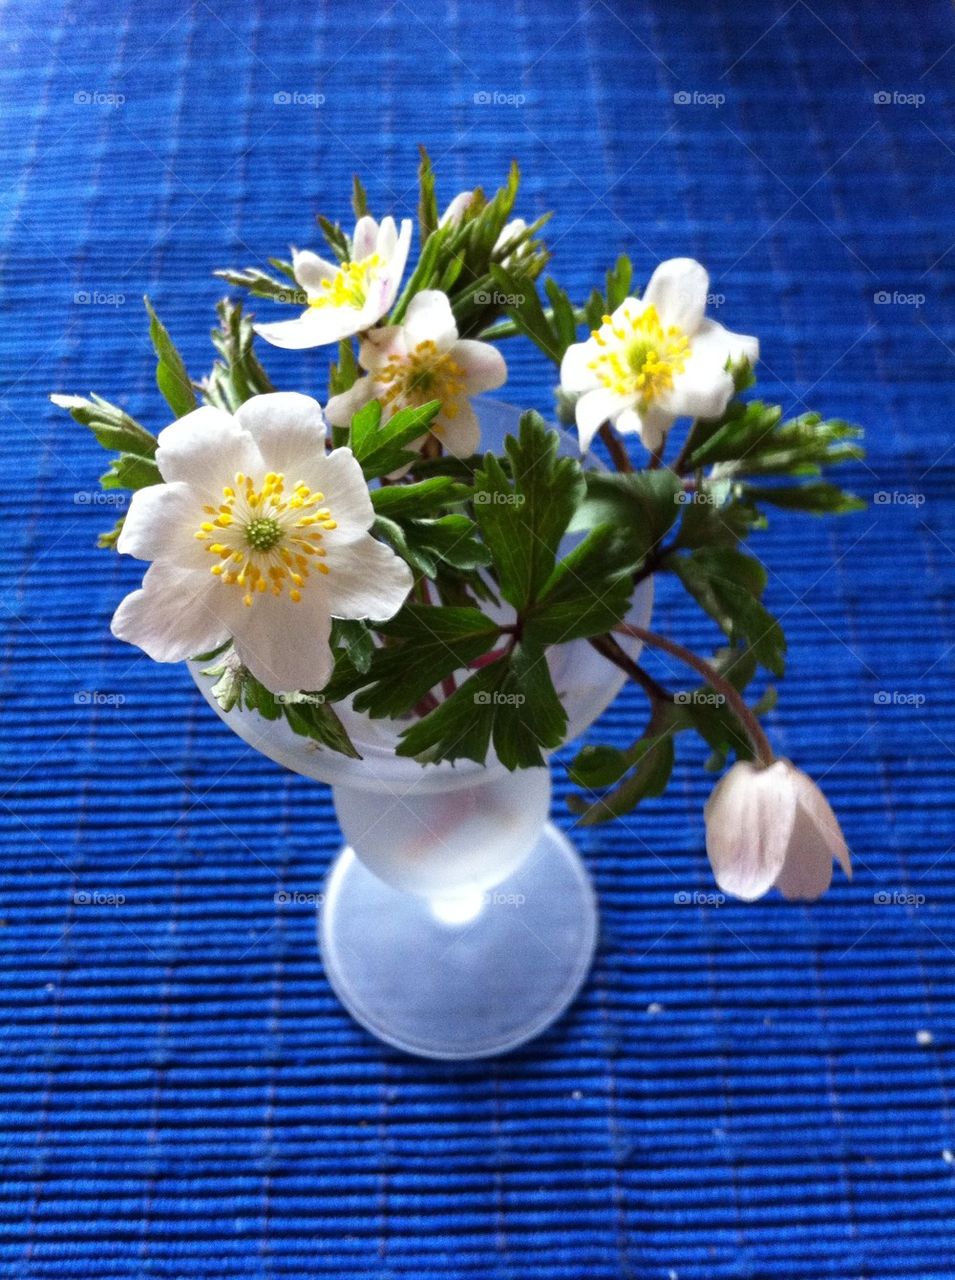 Wood anemones in vase.